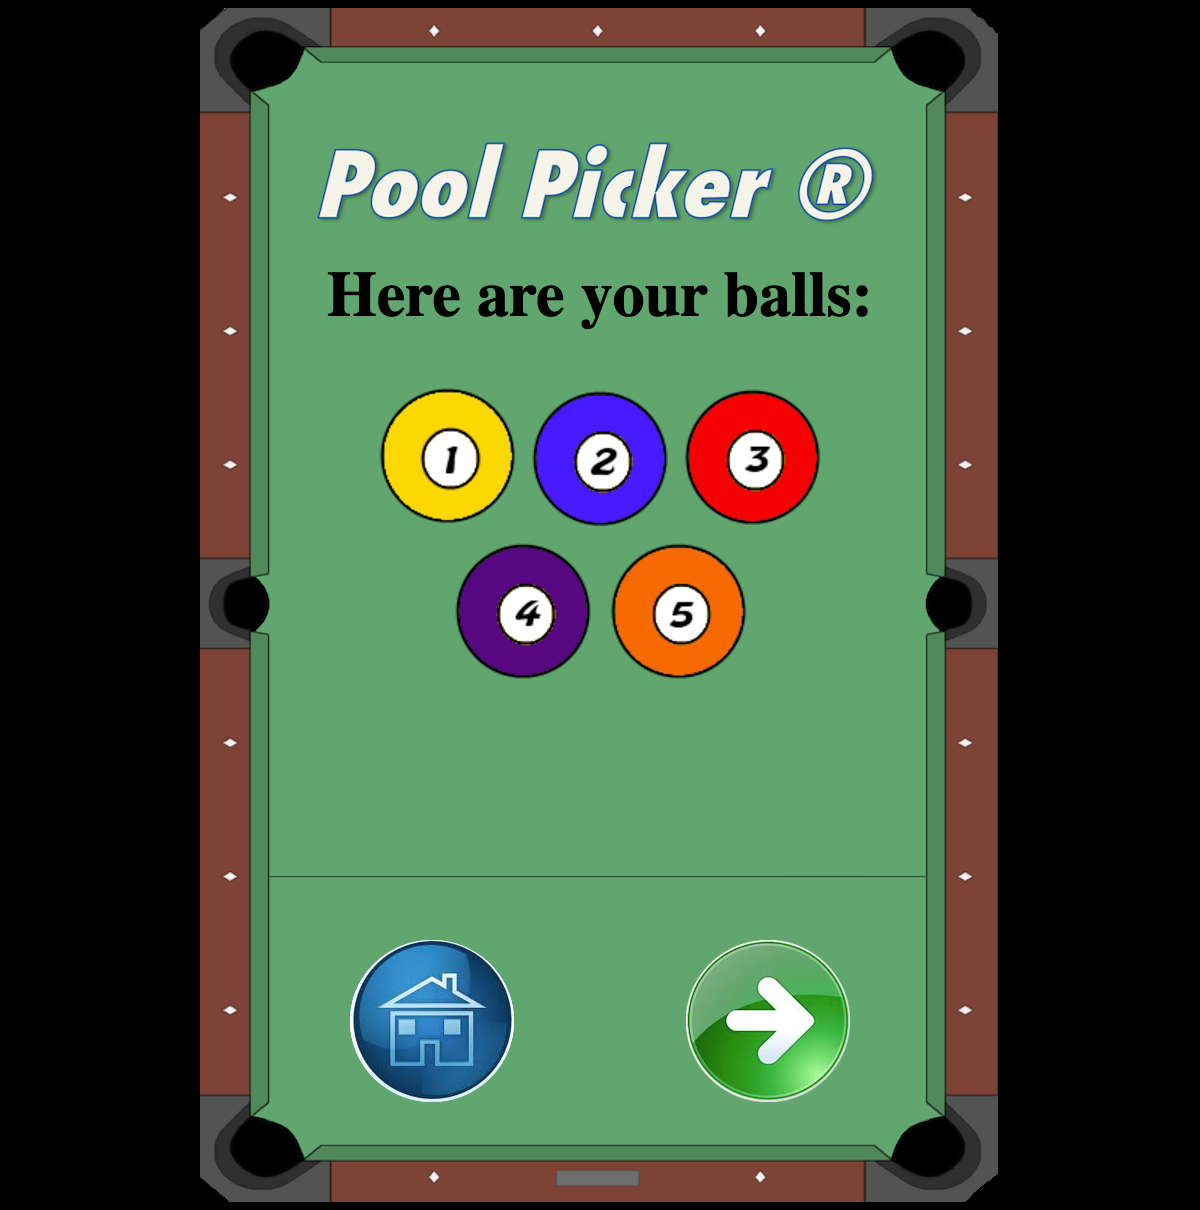 Pool Picker 2 - Balls Assigned